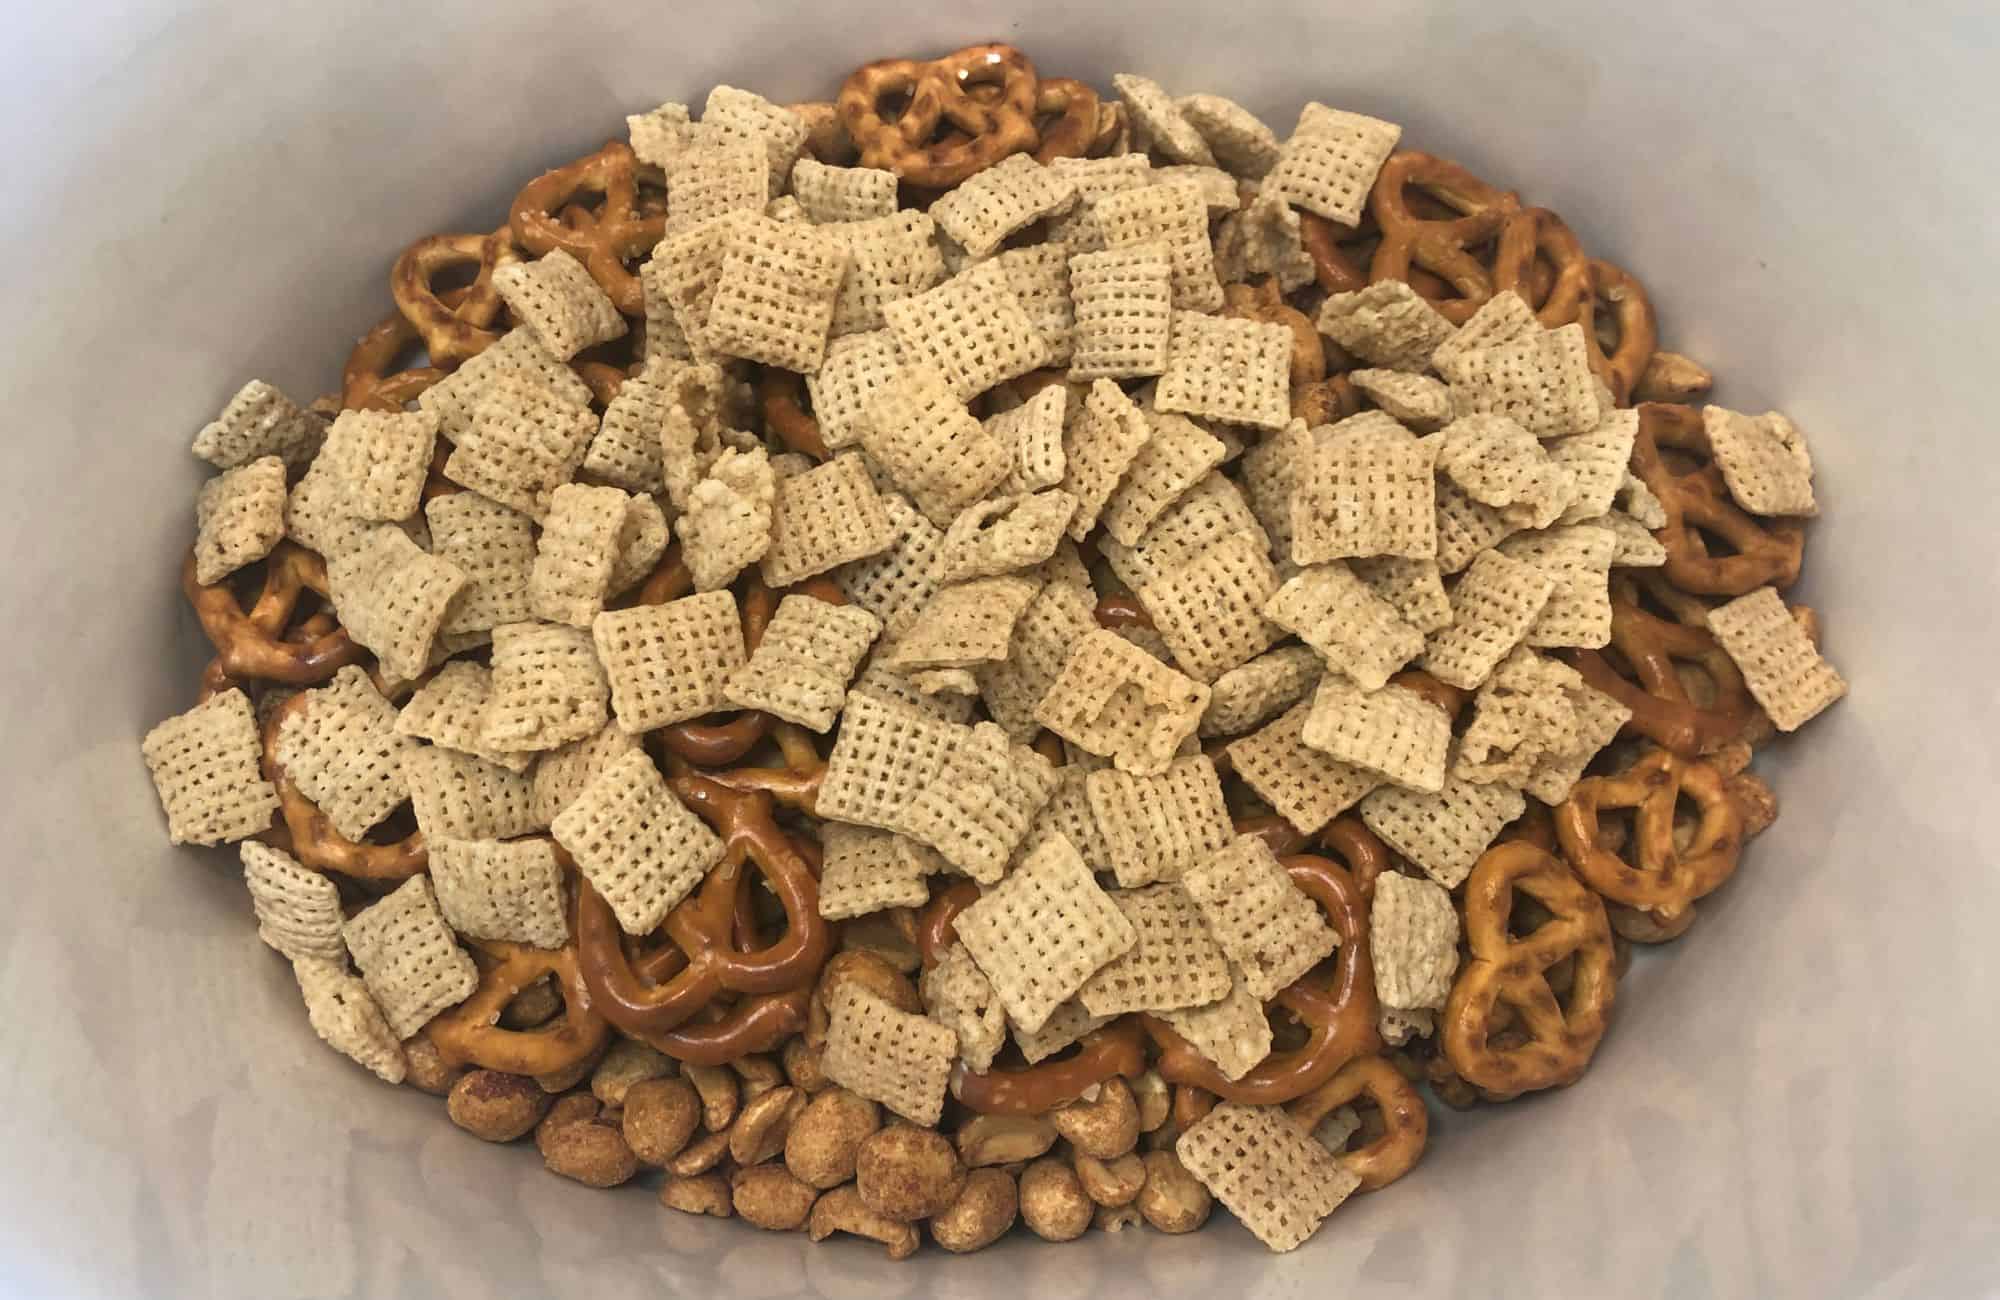 chex mix pretzels and peanuts in the crockpot